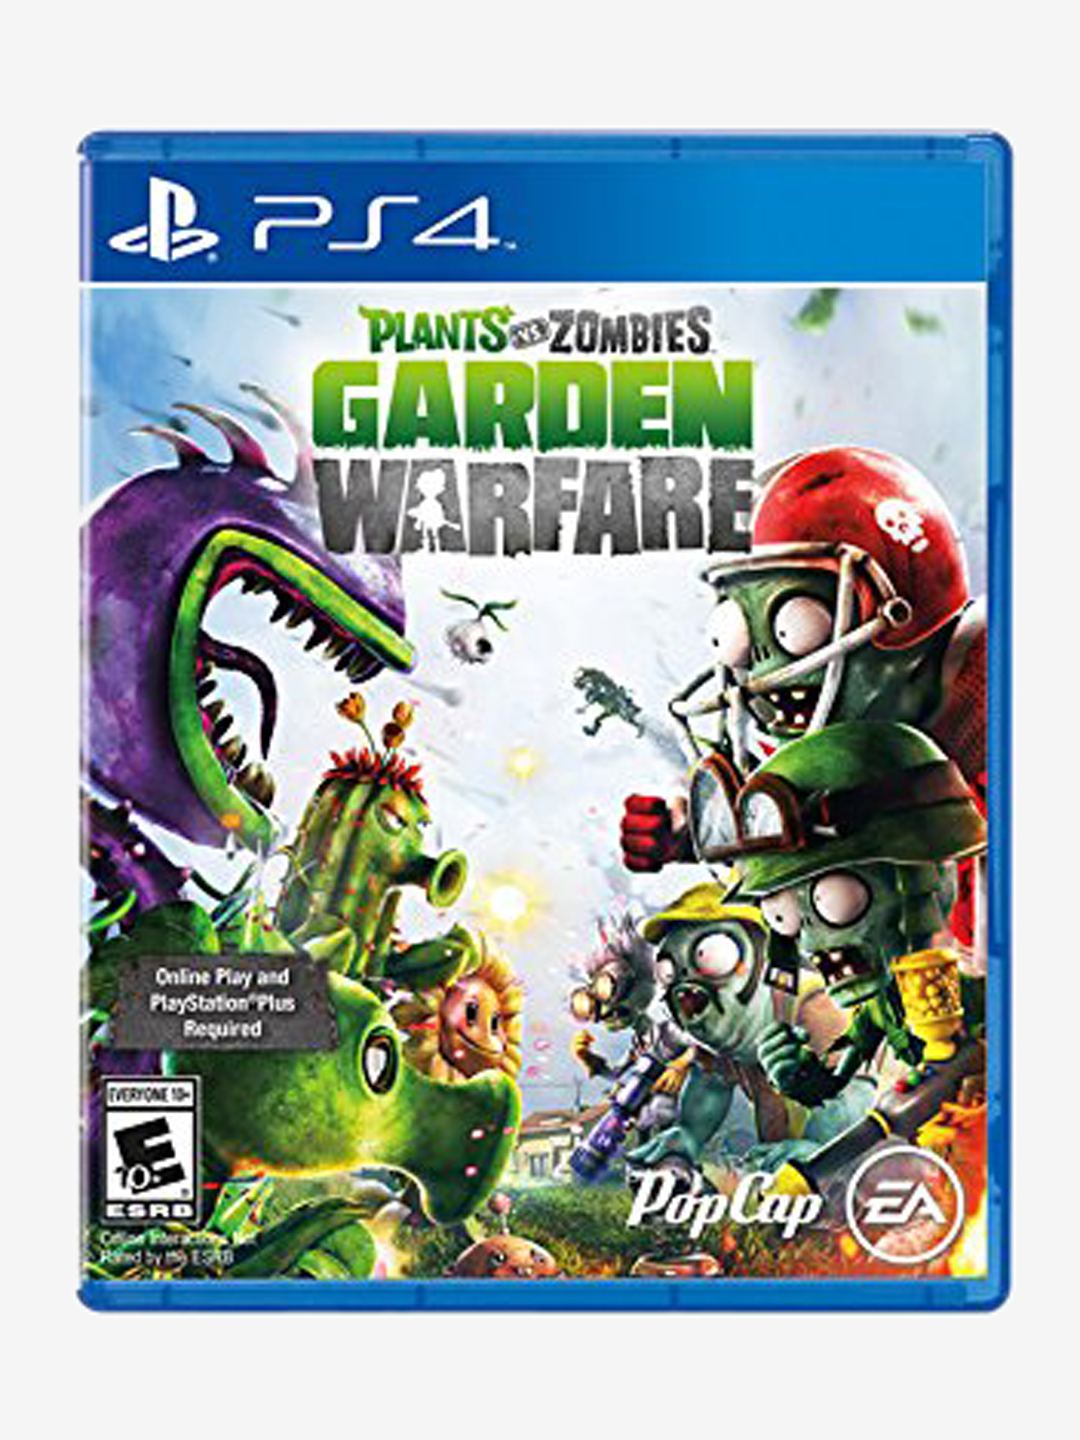 Plants vs. Zombies Garden Warfare - Split Screen Gameplay and Boss